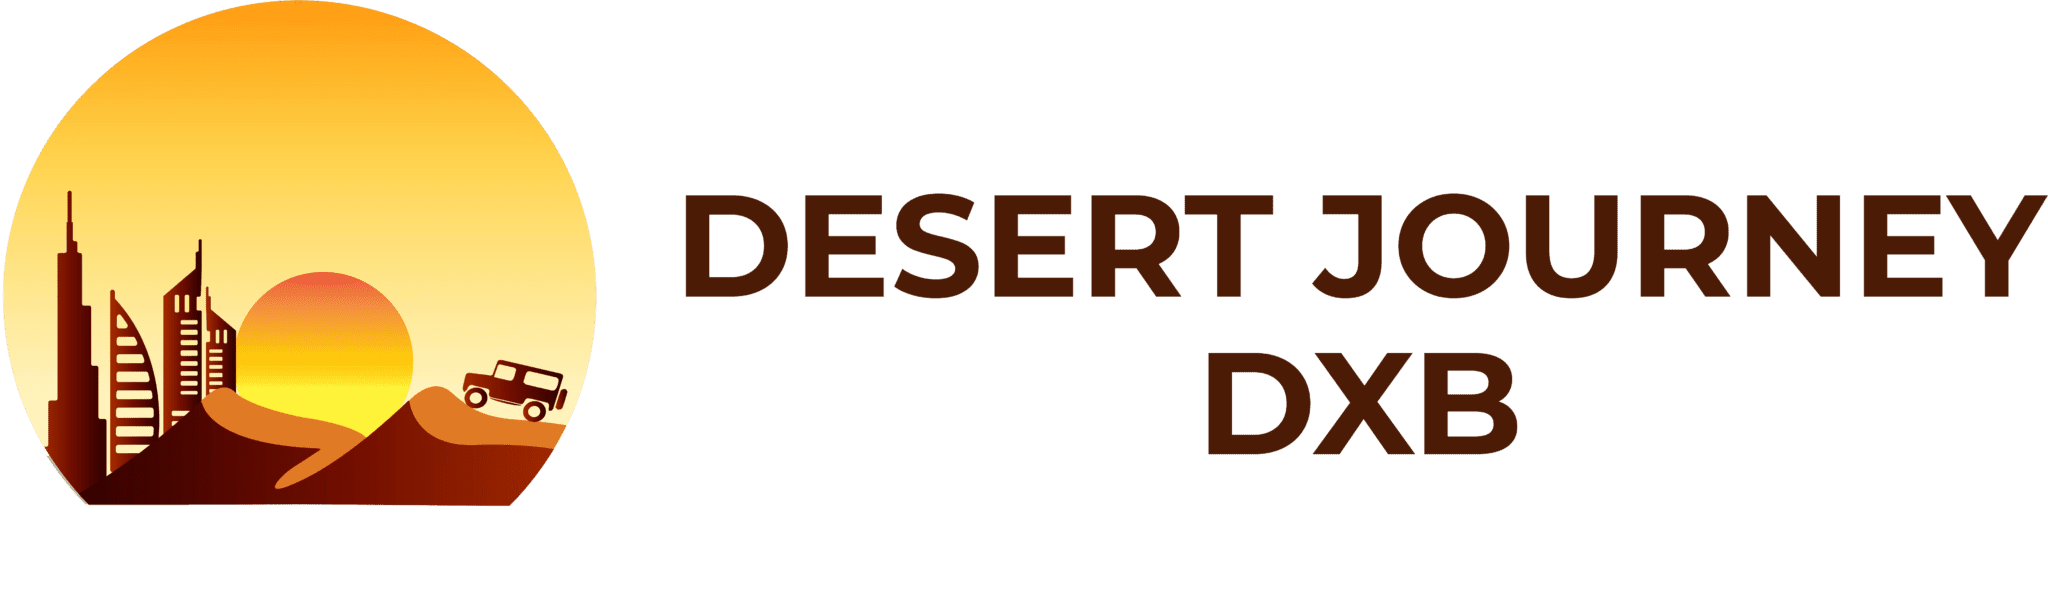 Desert Journey DXB